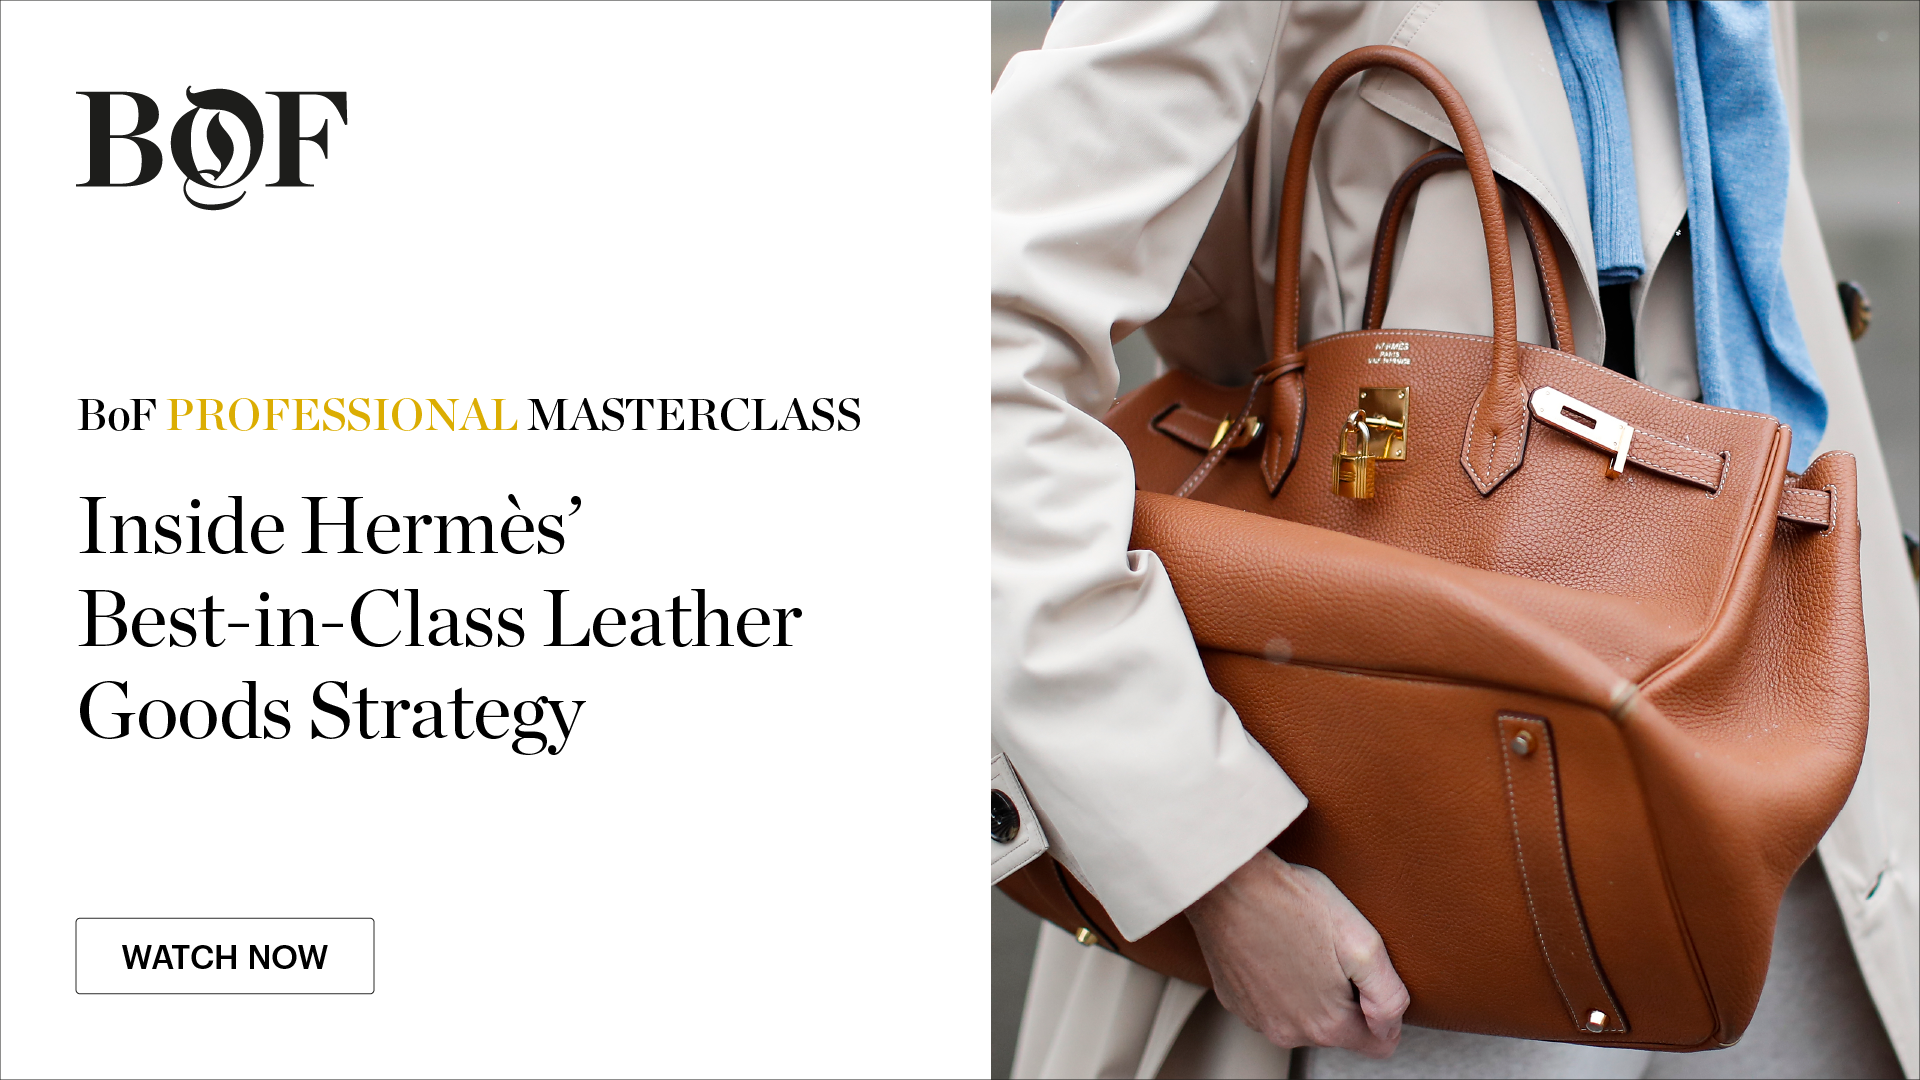 Masterclass, Inside Hermès' Best-in-Class Leather Goods Strategy